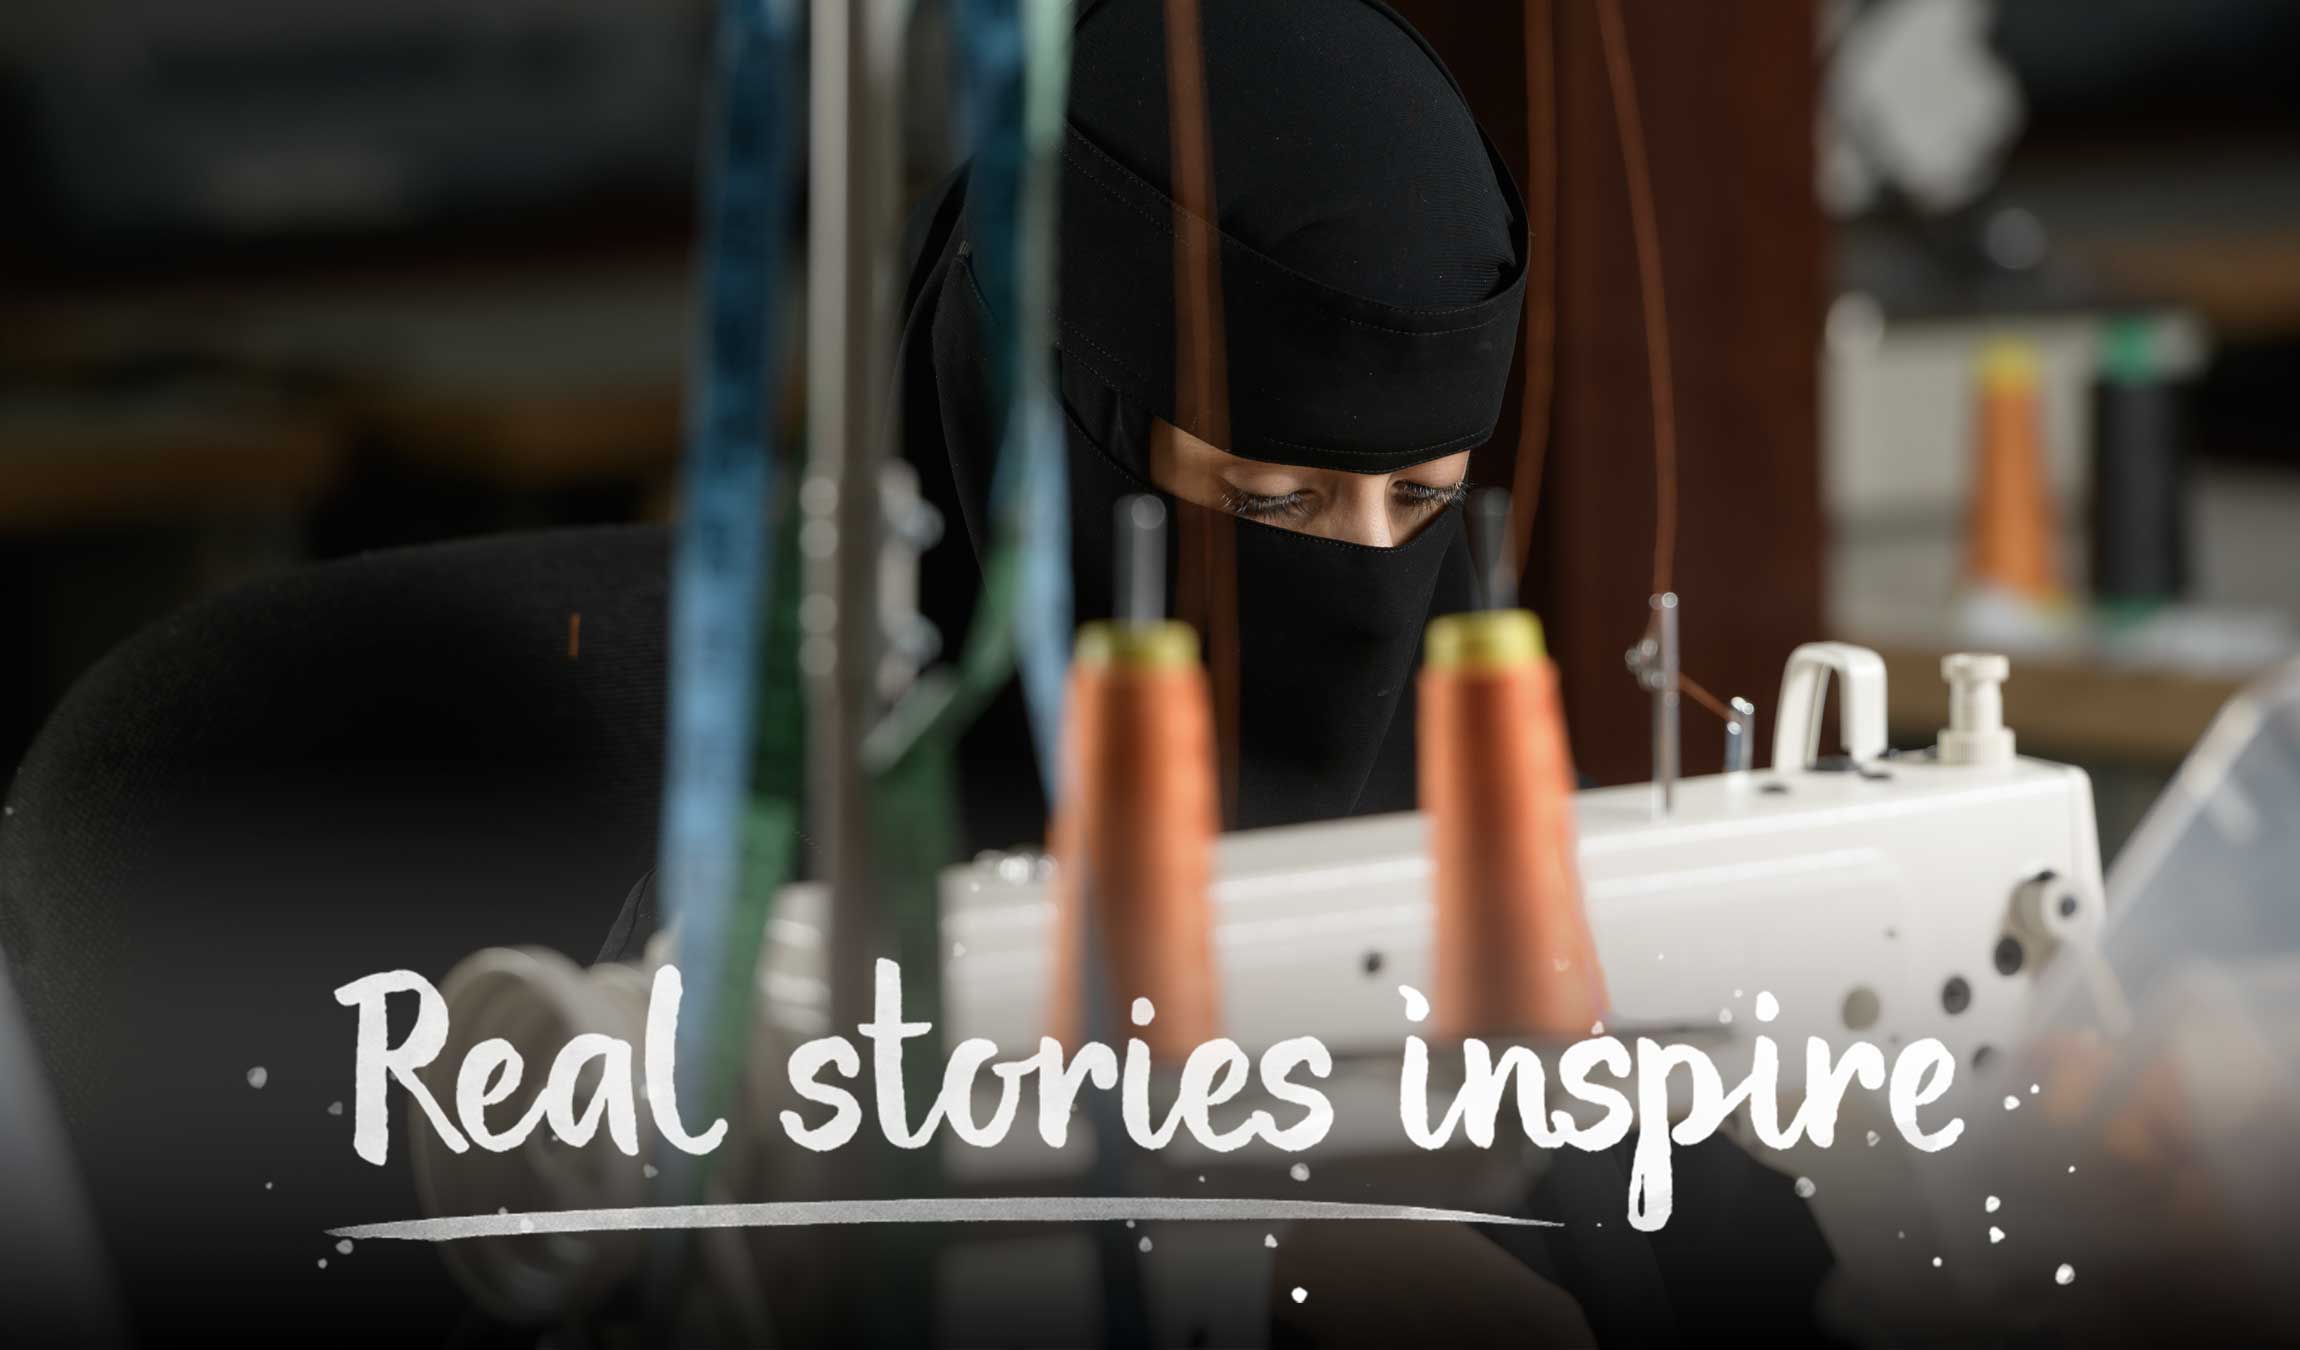 Real stories inspire - An indomitable spirit